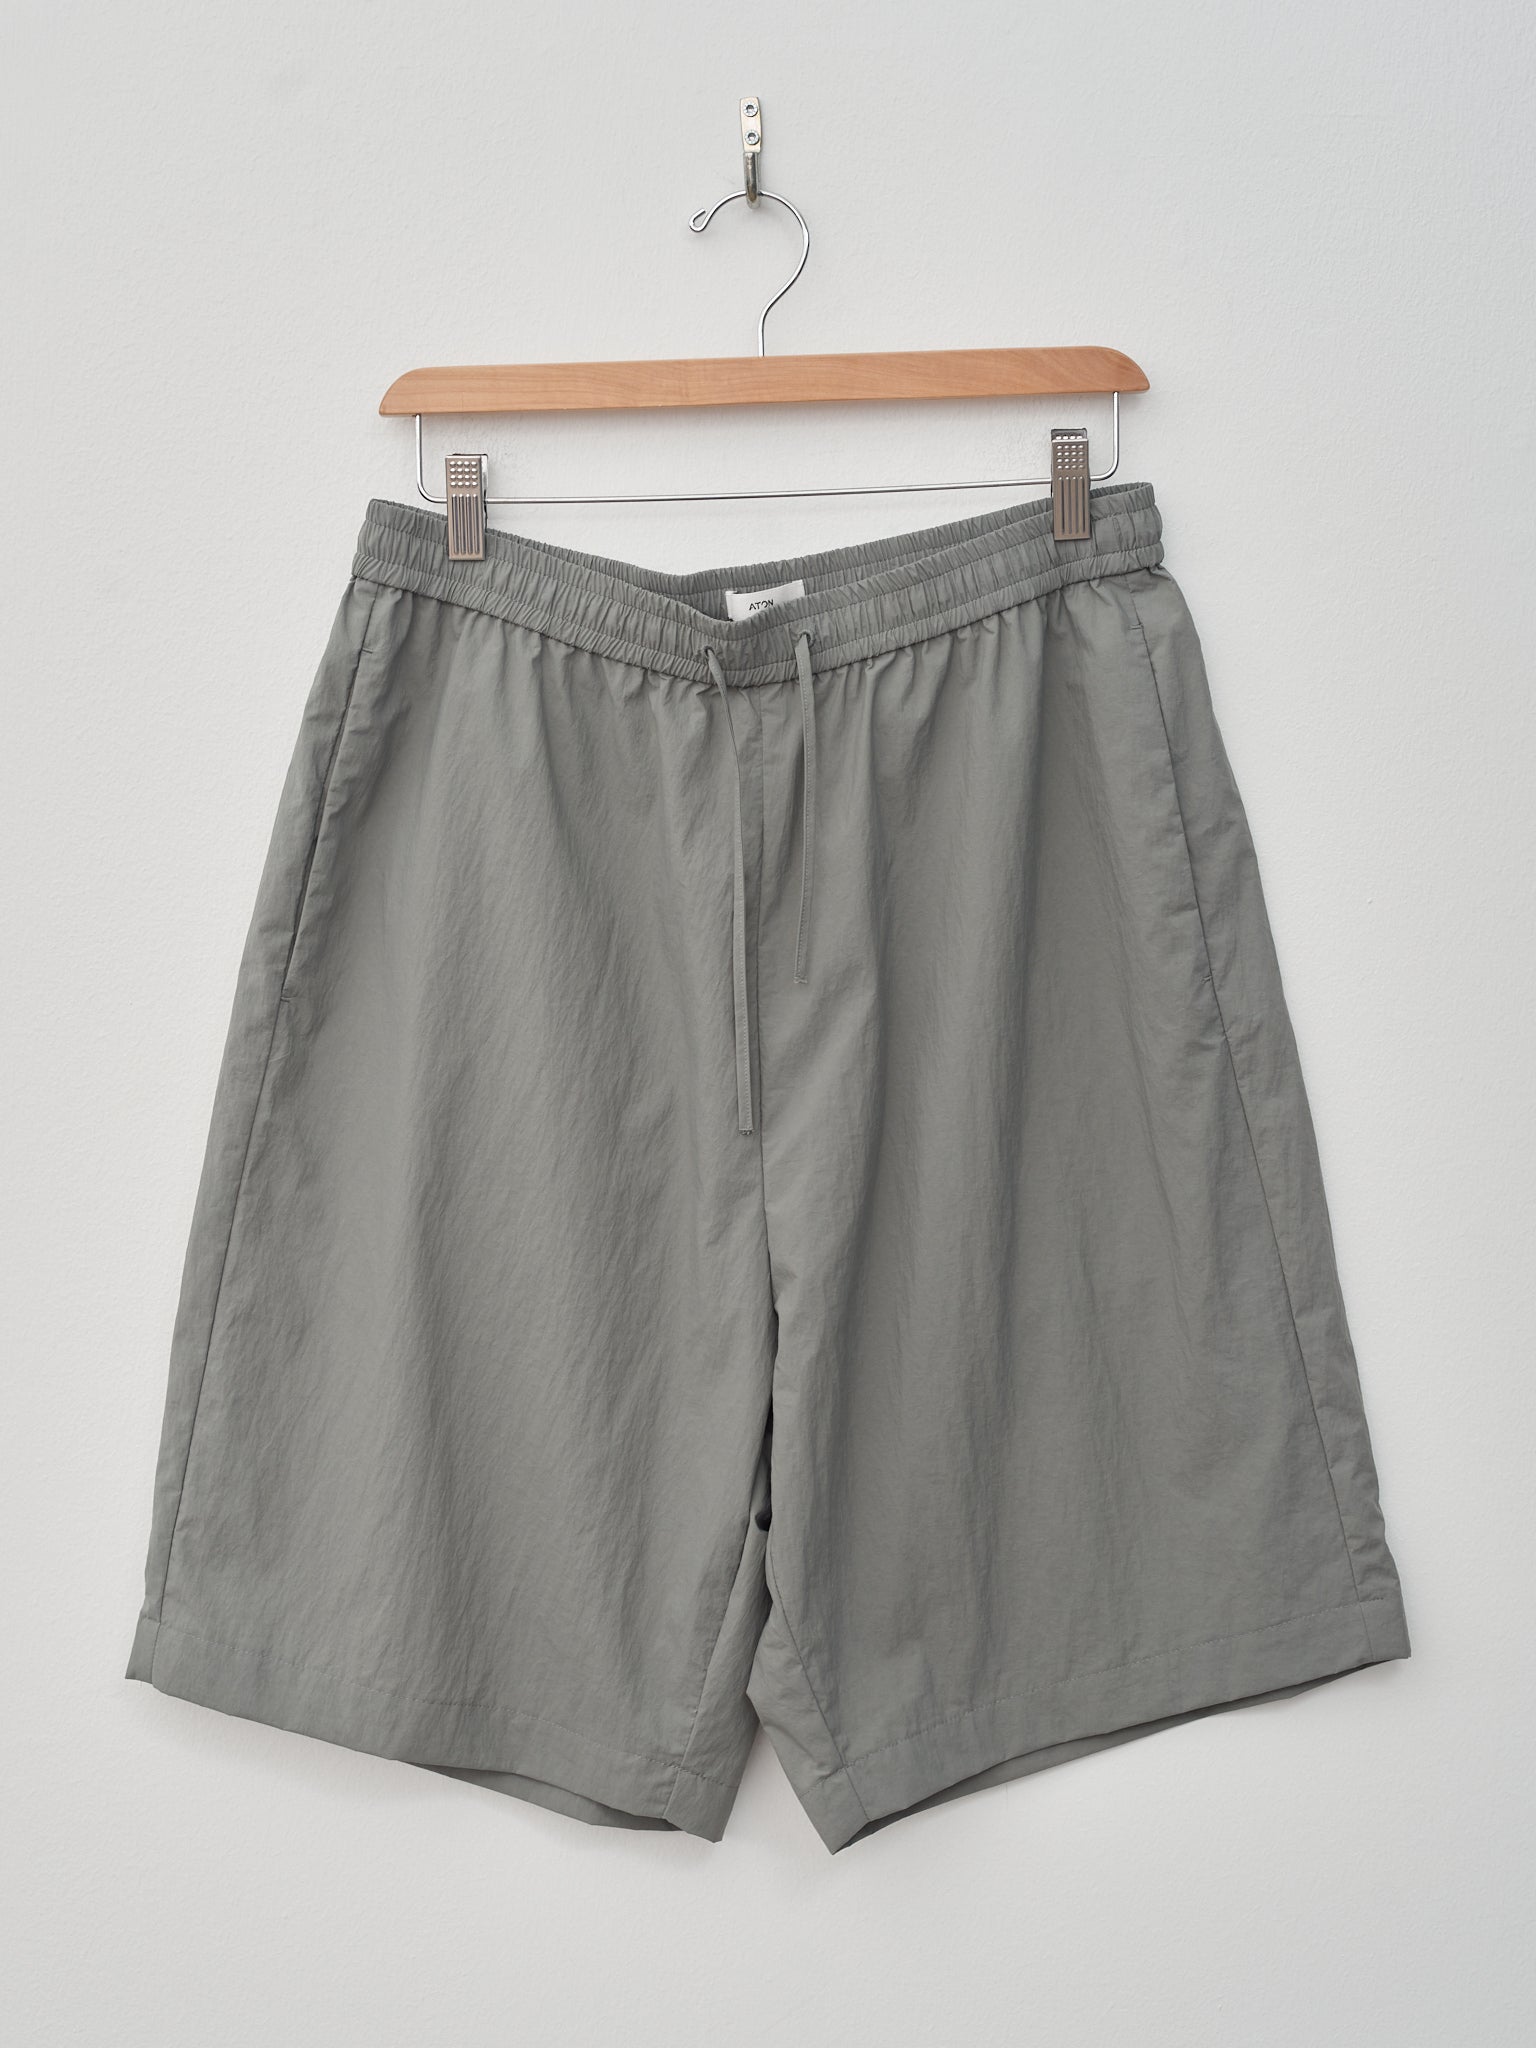 Namu Shop - Aton Travel Nylon Easy Shorts - Green